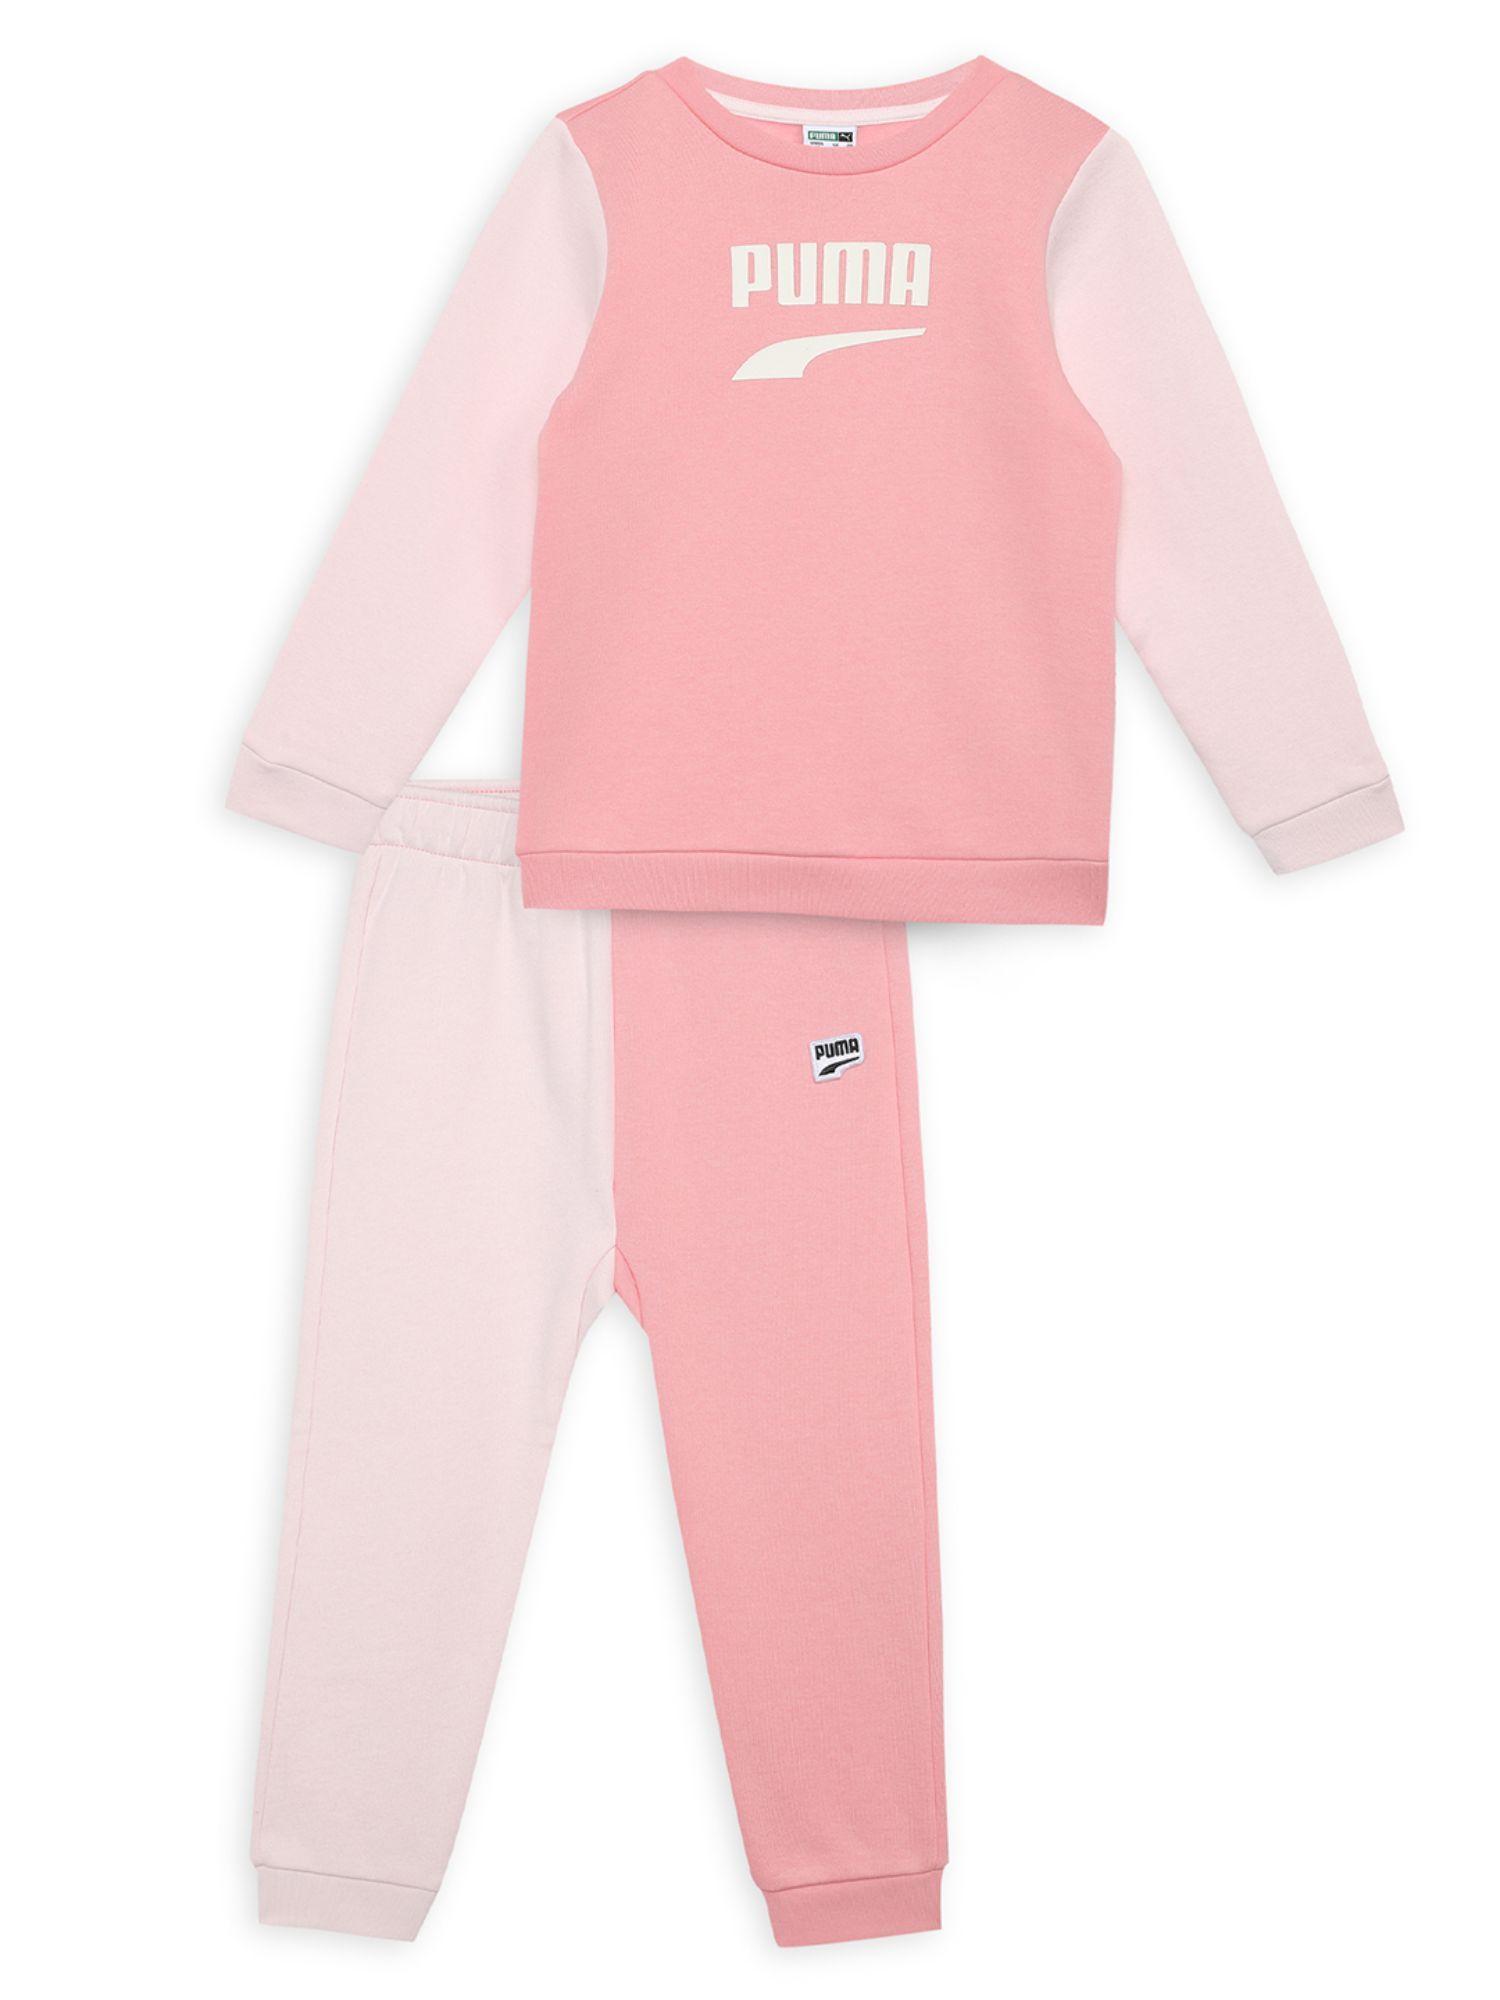 minicats downtown unisex pink track suit